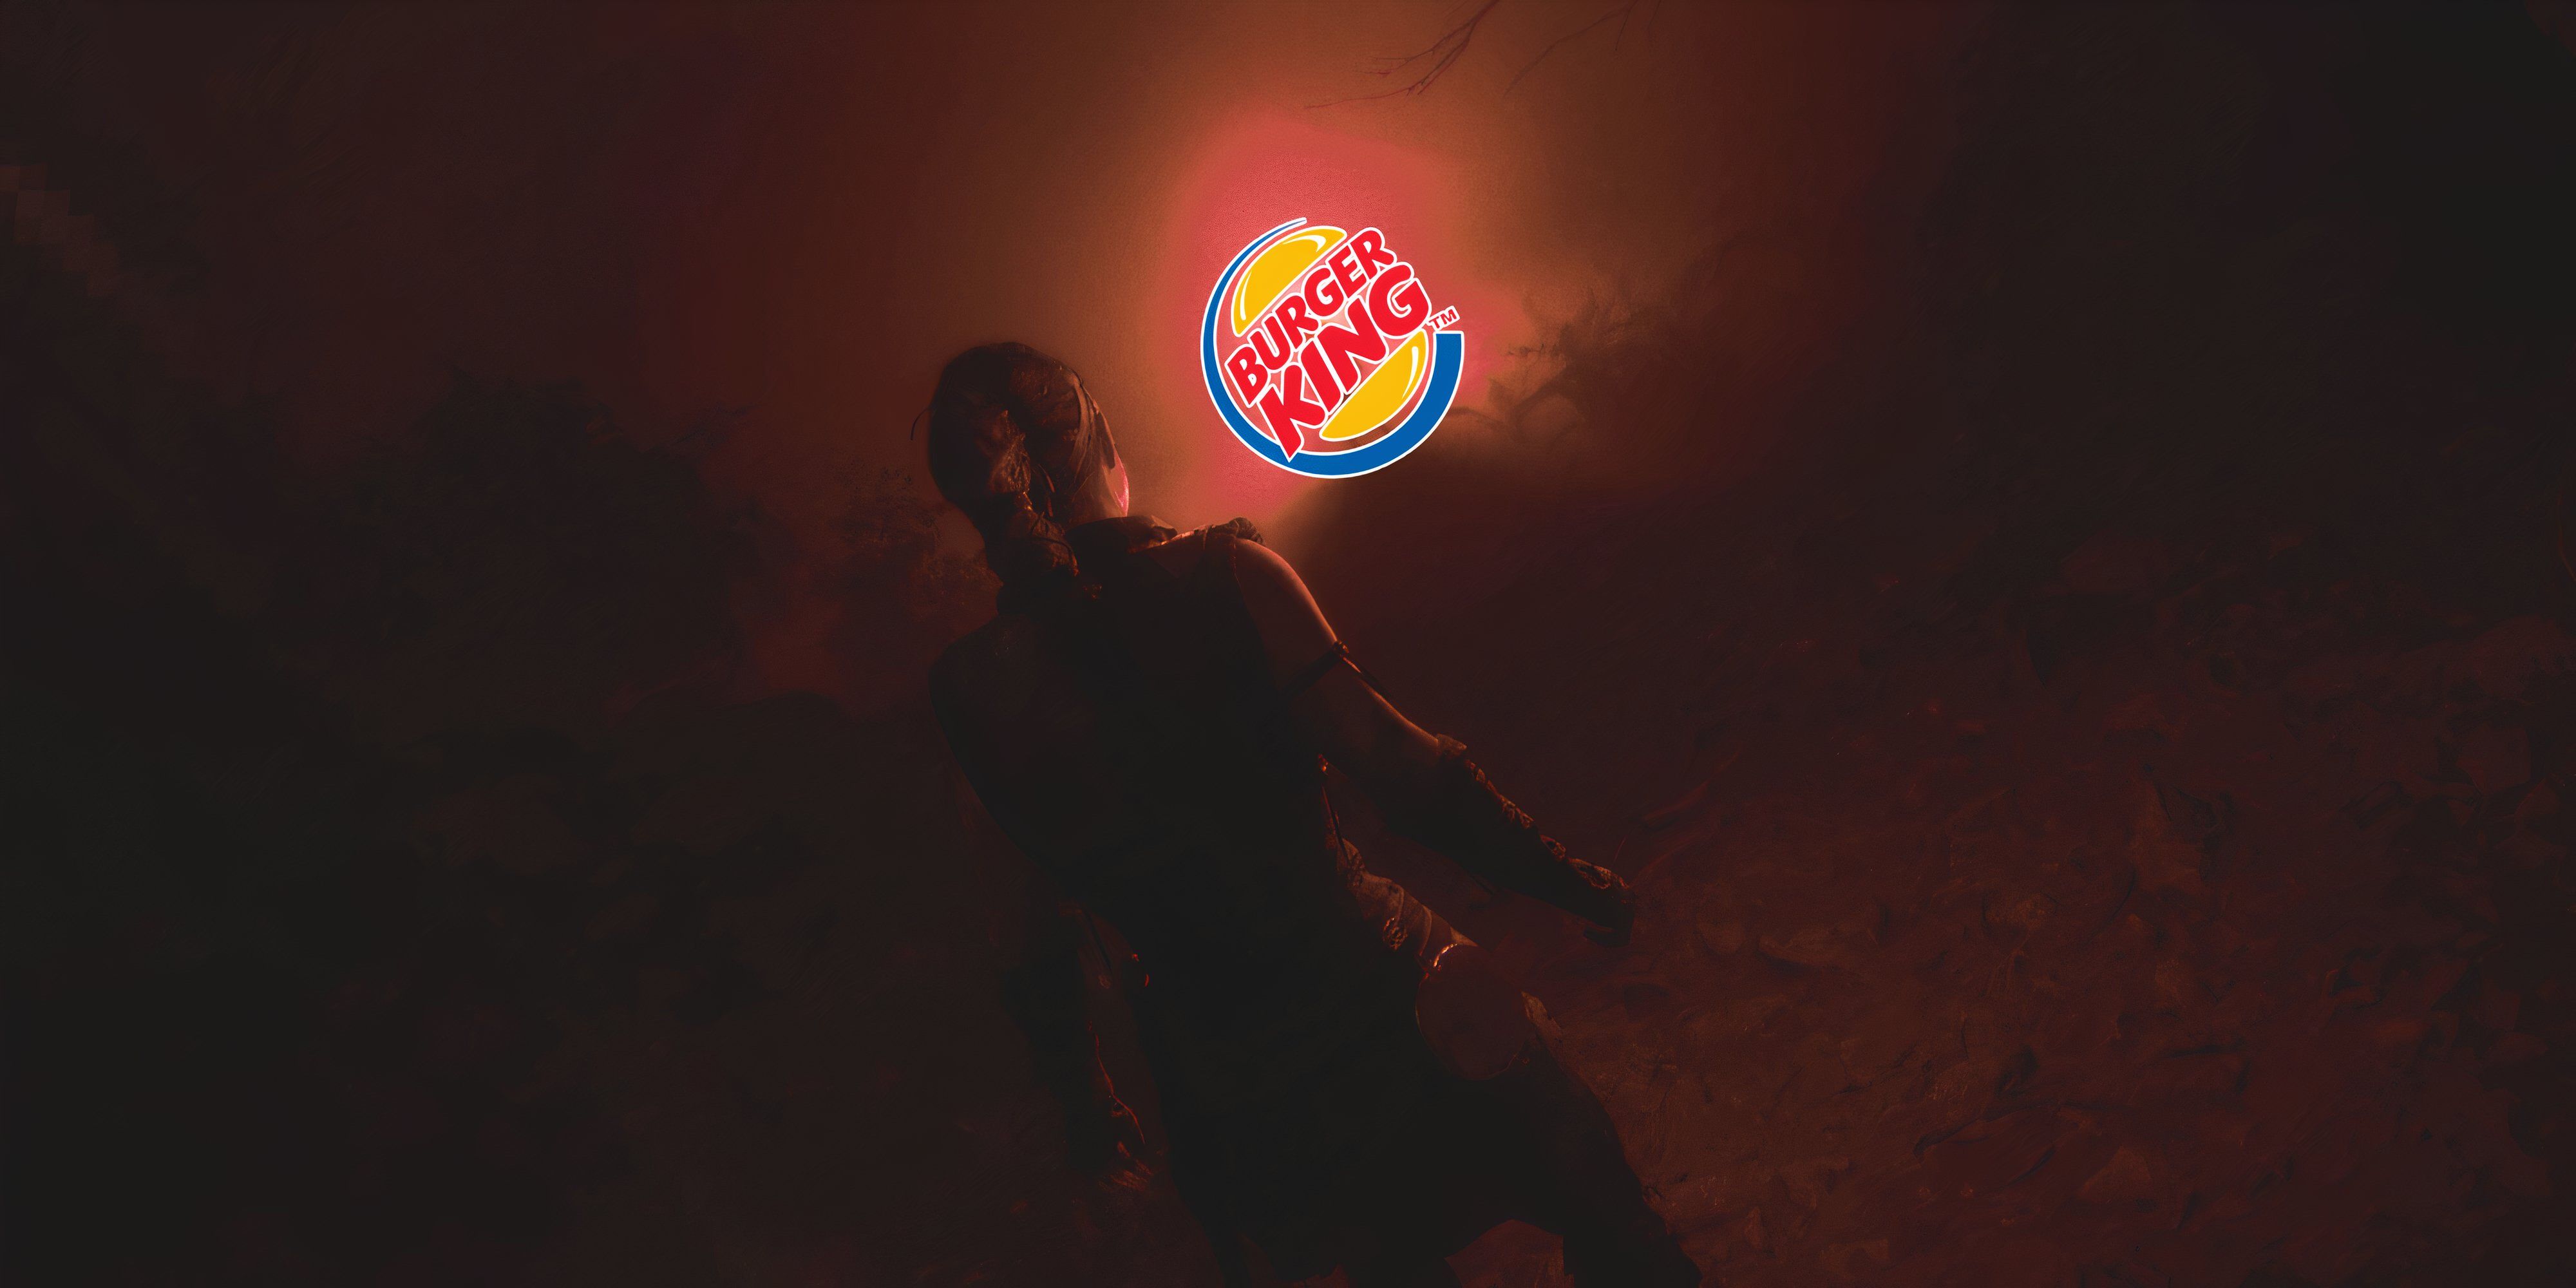 Senua staring out at a glowing Burger King logo